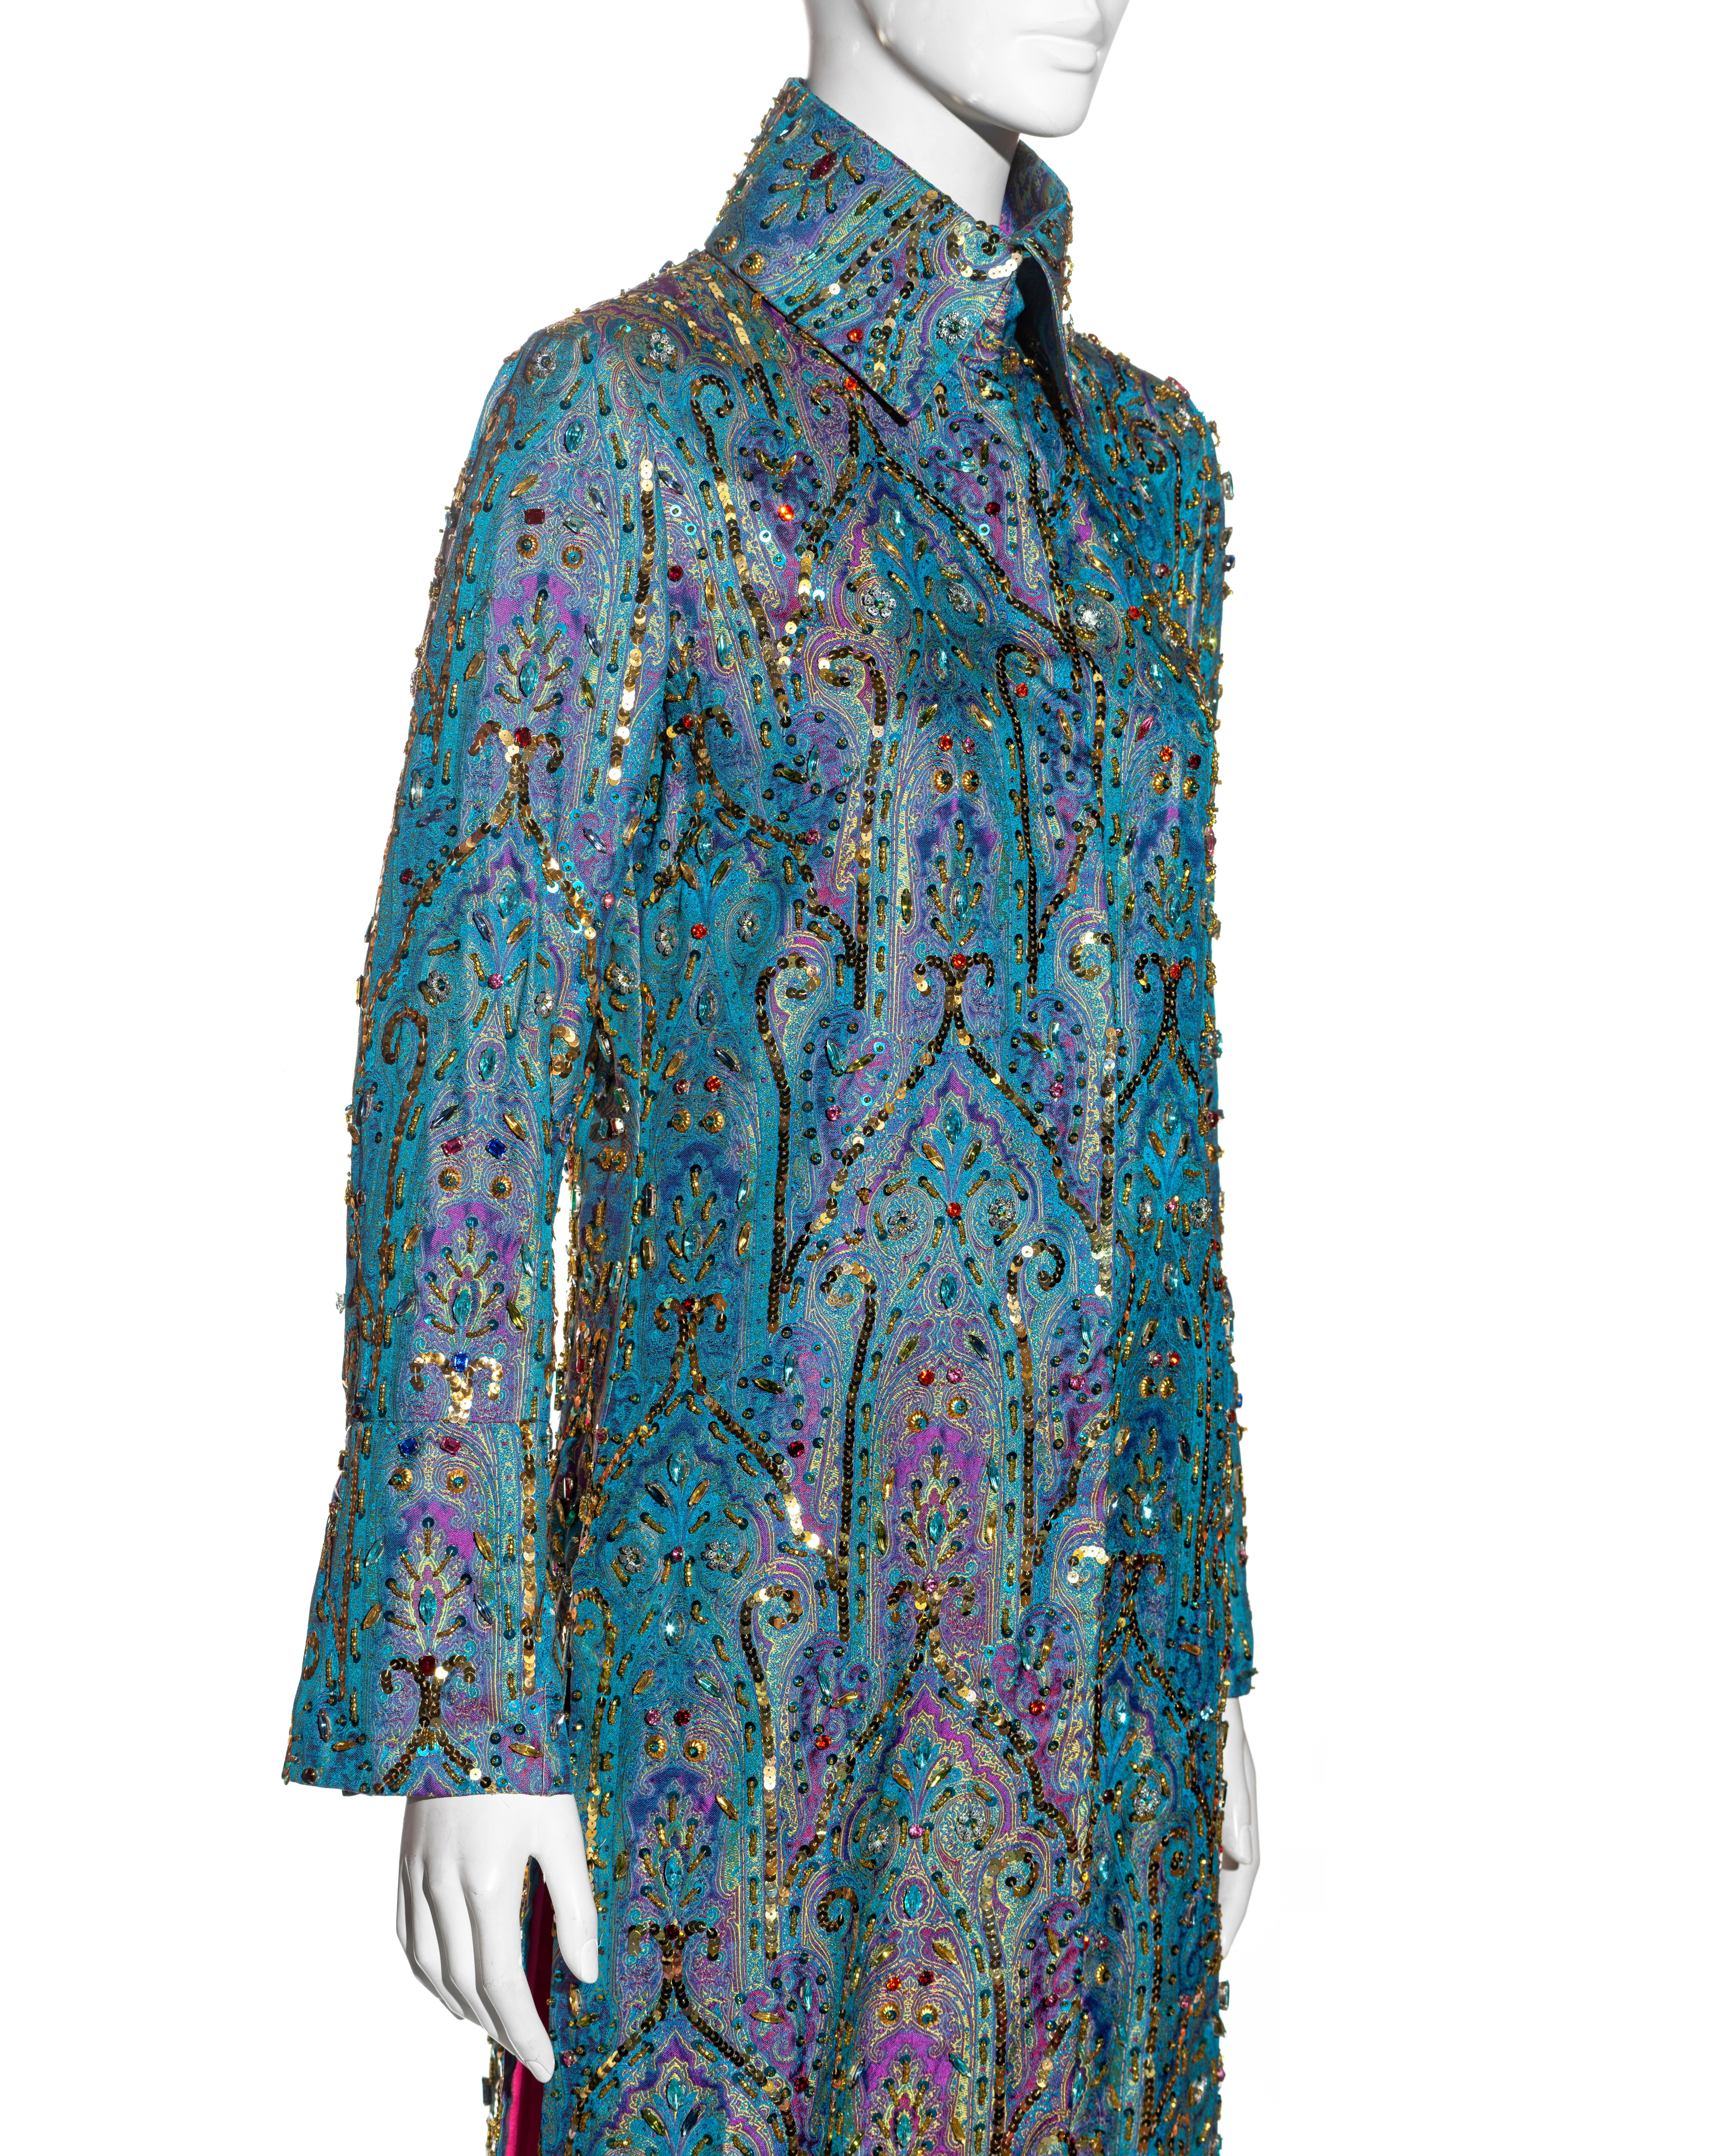 Dolce & Gabbana crystal embellished metallic silk brocade evening coat, ss 2000 For Sale 2